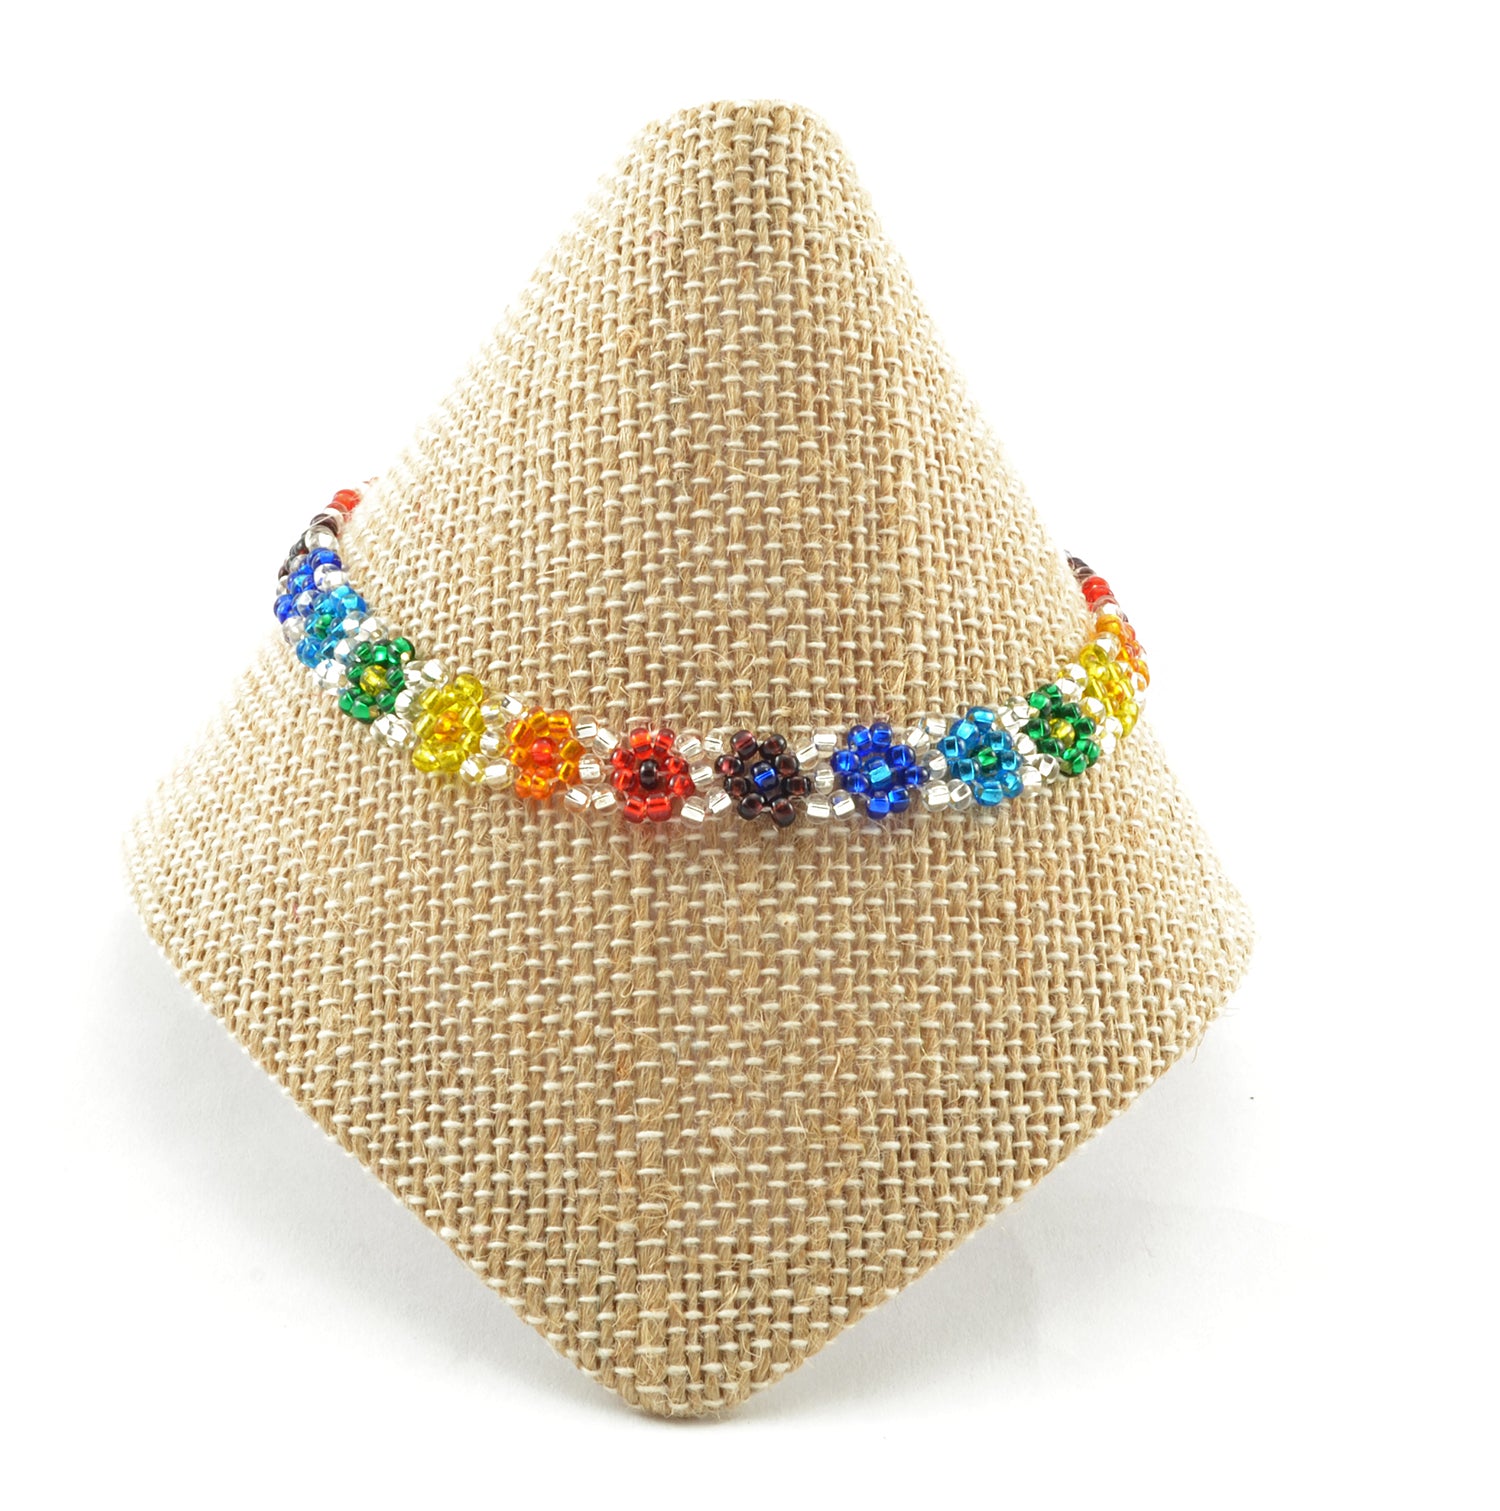 Bulk Daisy Flower Seed Bead Bracelet - Choose Your Favorite String Color! 10 Bracelets (-10%)